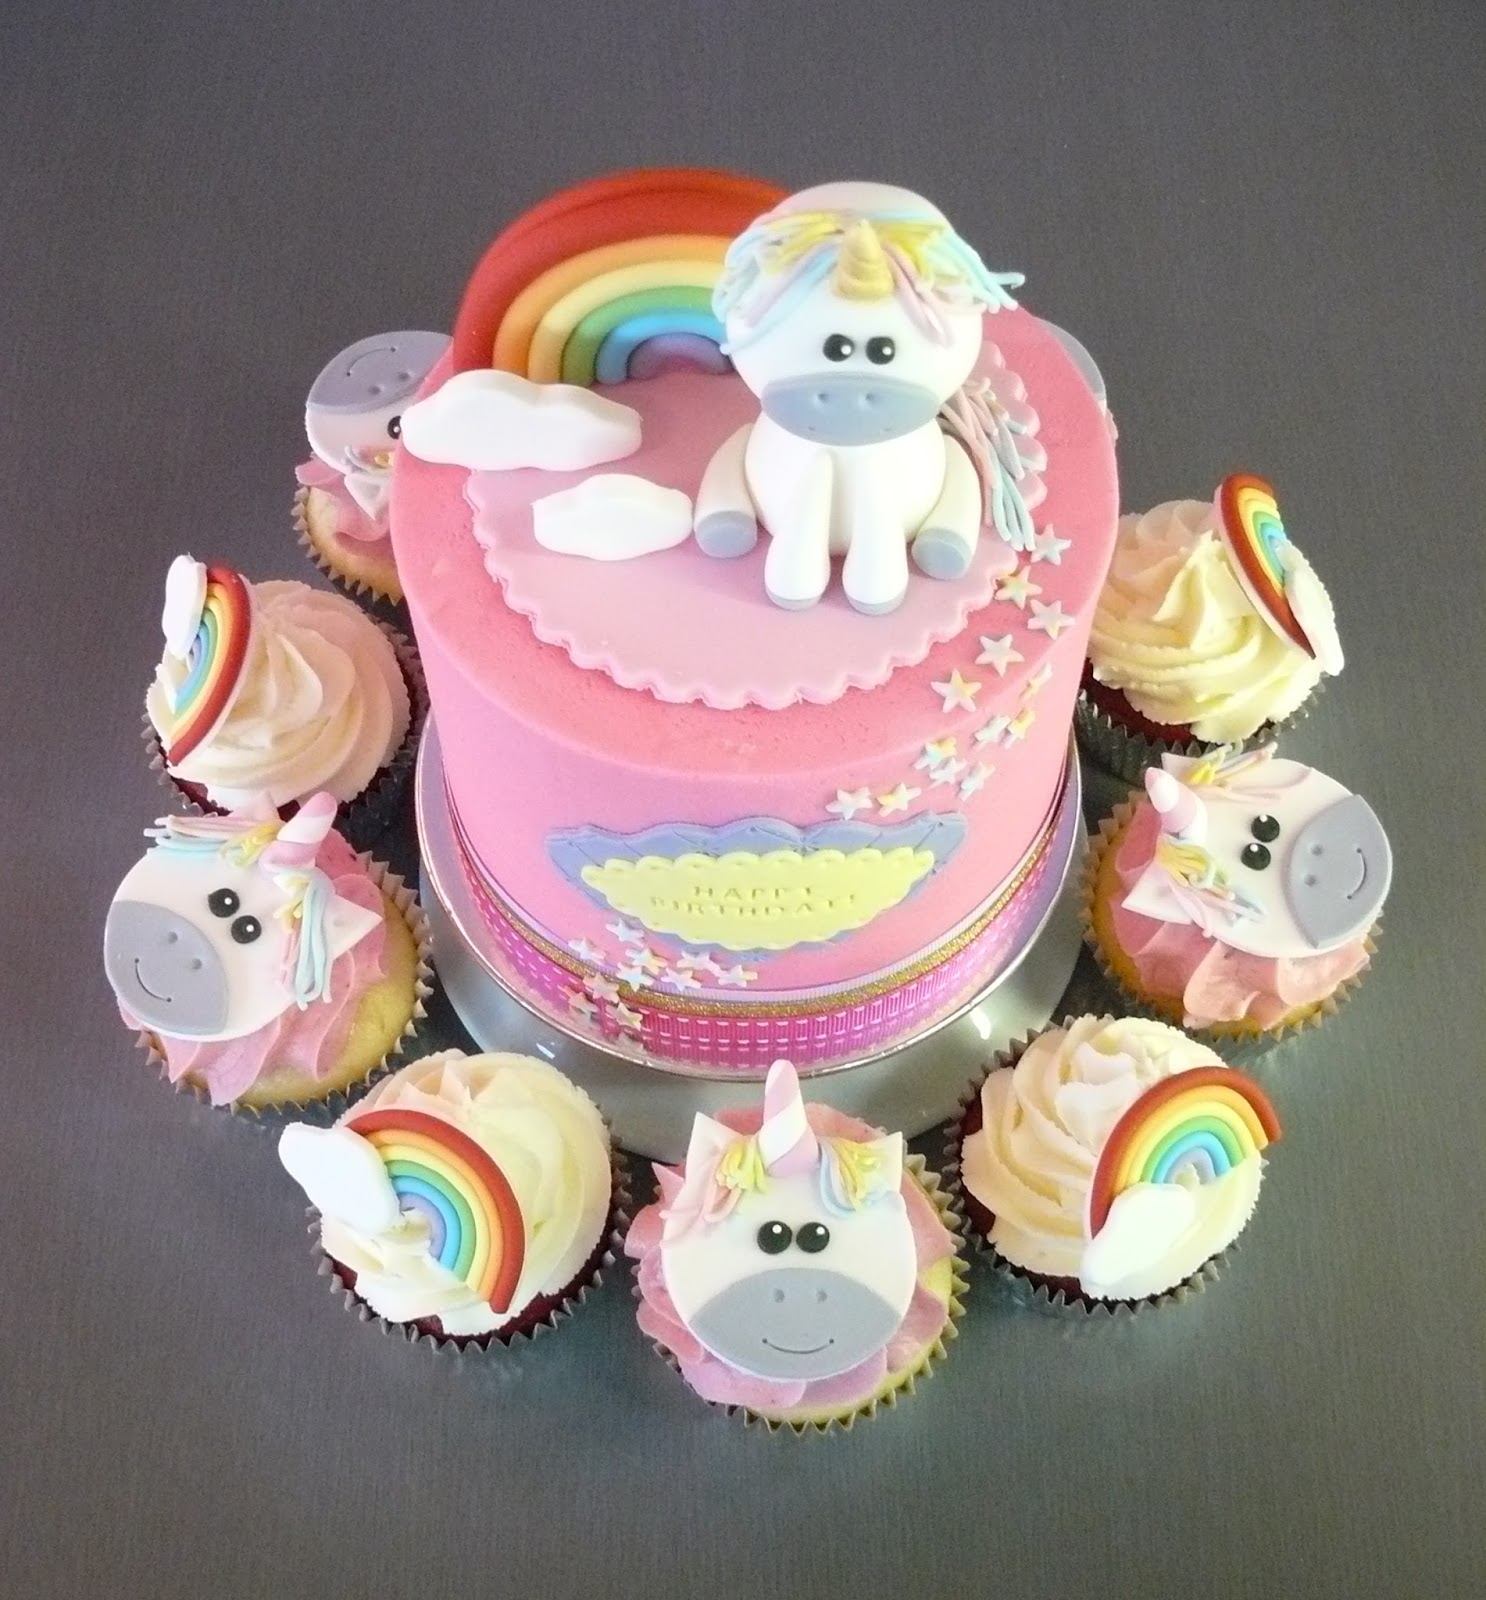 The Cup Cake Taste - Brisbane Cupcakes: Unicorn Cupcakes and Cake